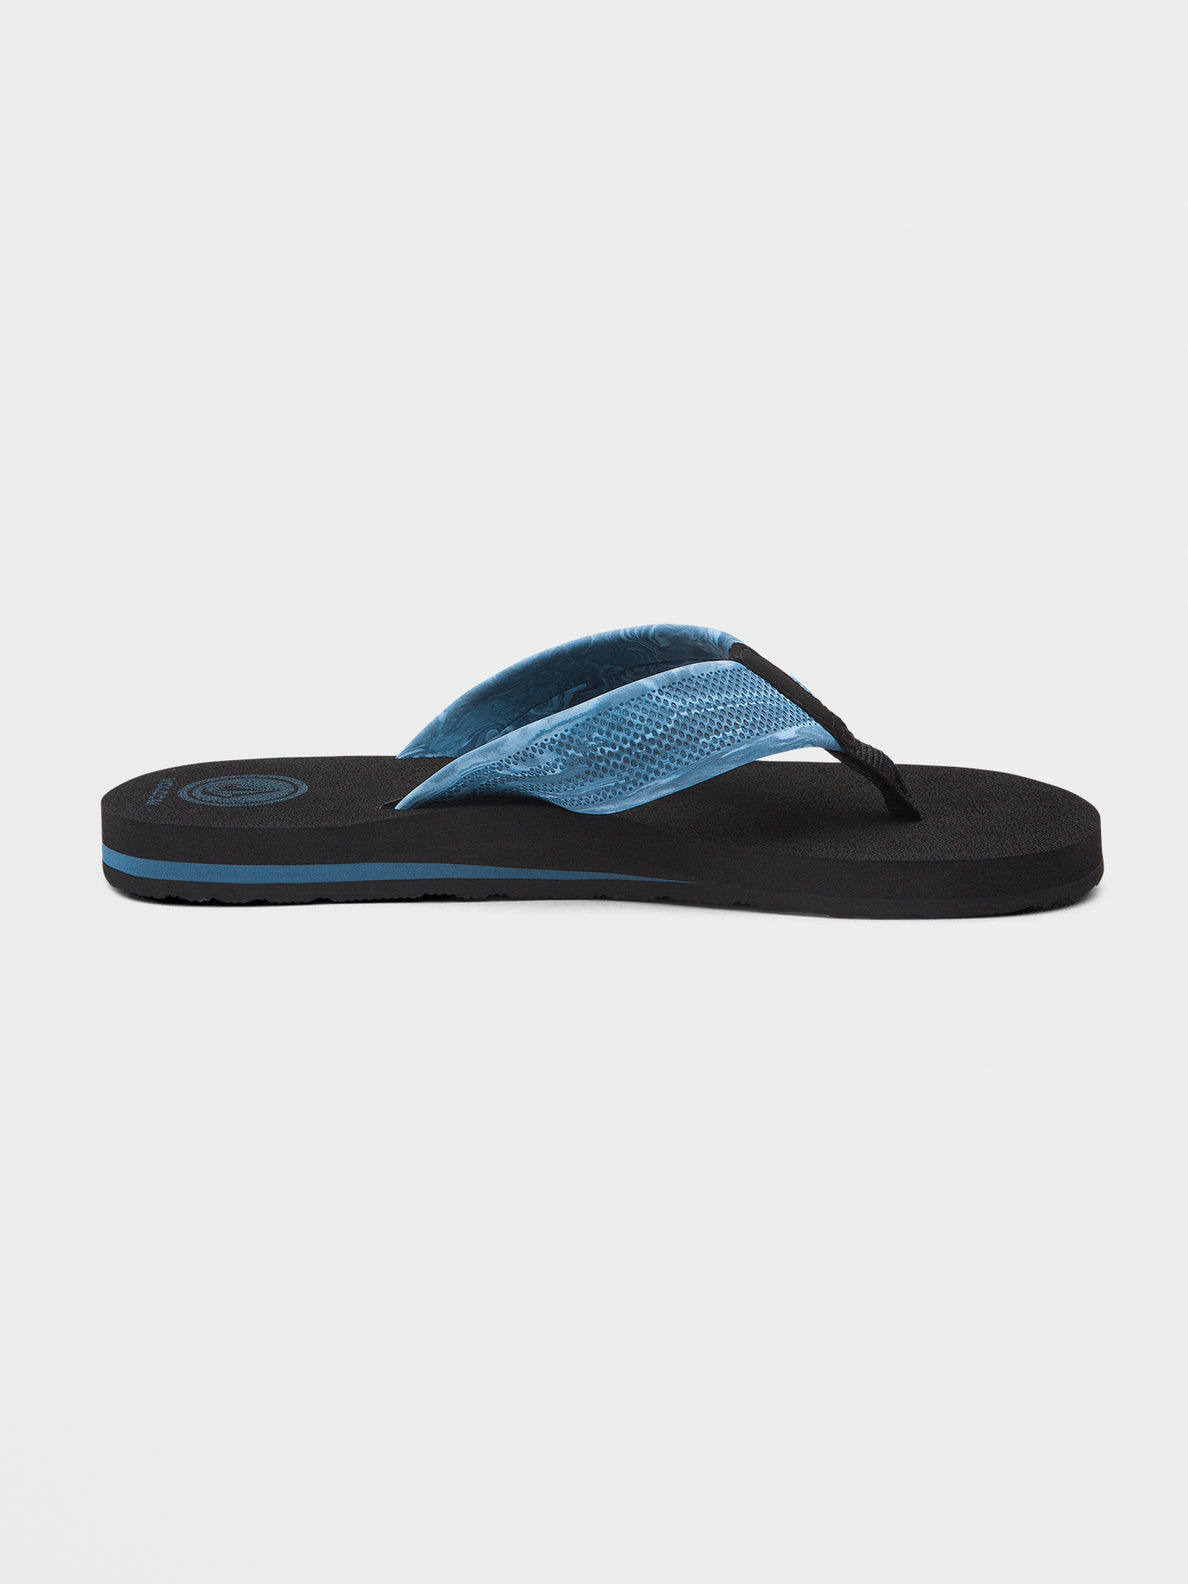 Daycation Sandals - Aged Indigo (V0812352_AIN) [2]